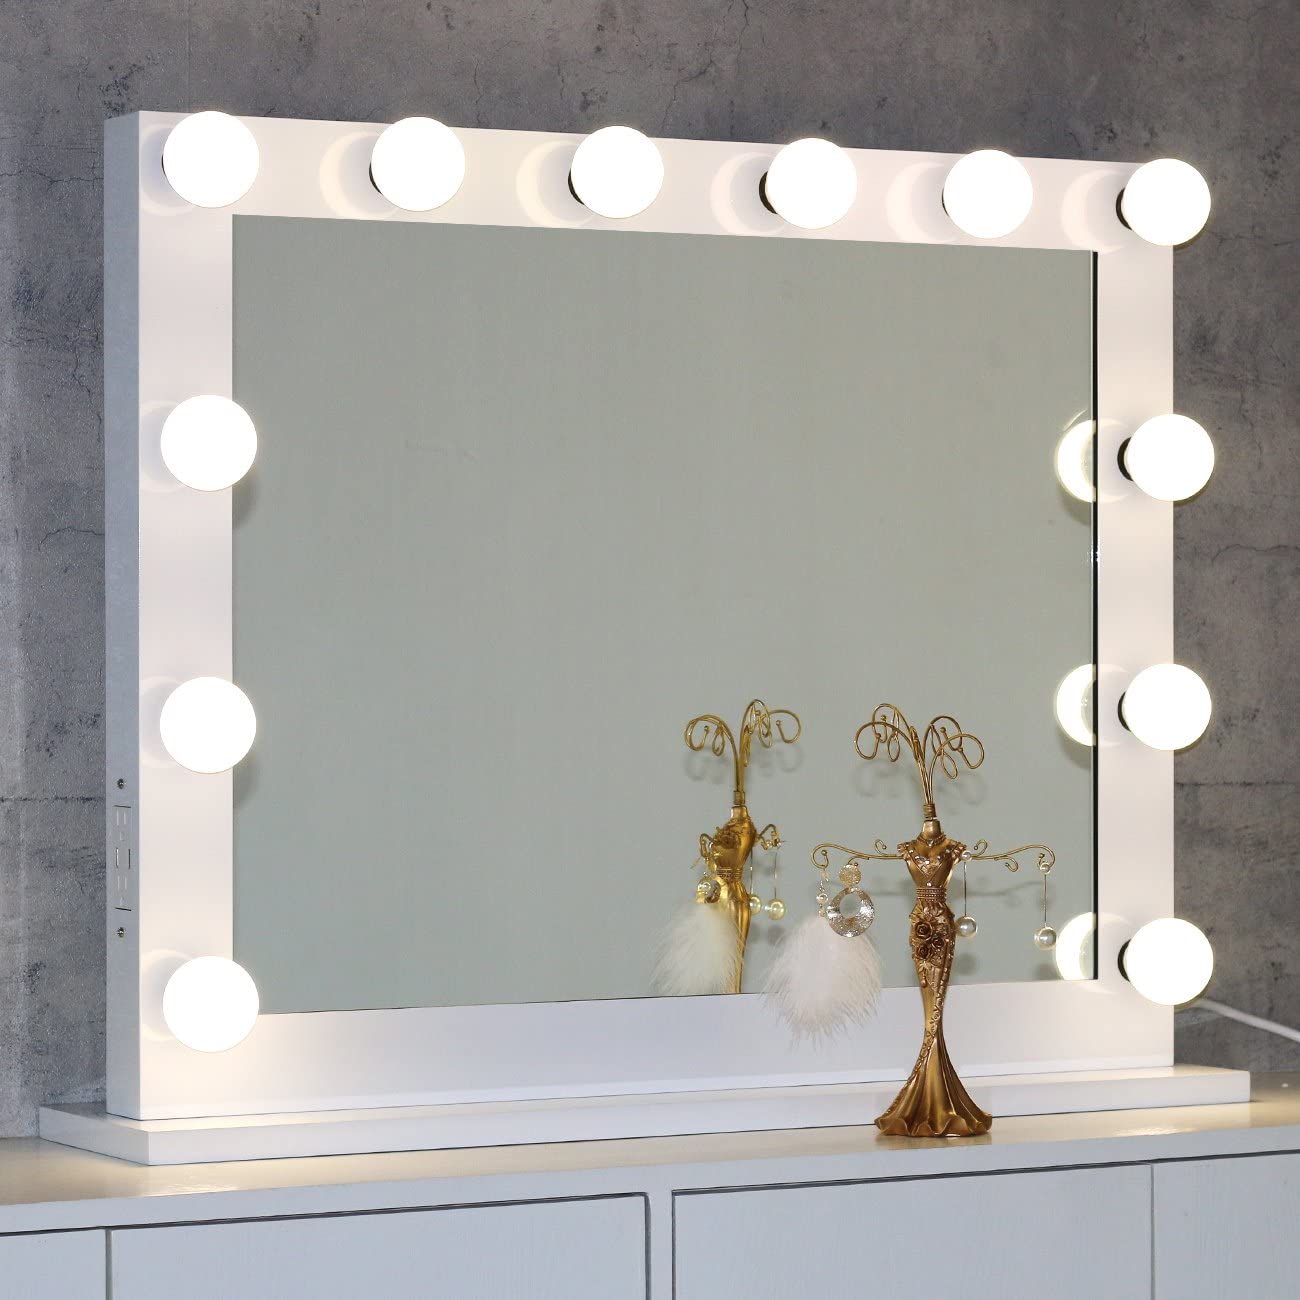 Top 7 Best Light Up Vanity Mirrors, Best Lamps For A Makeup Vanity